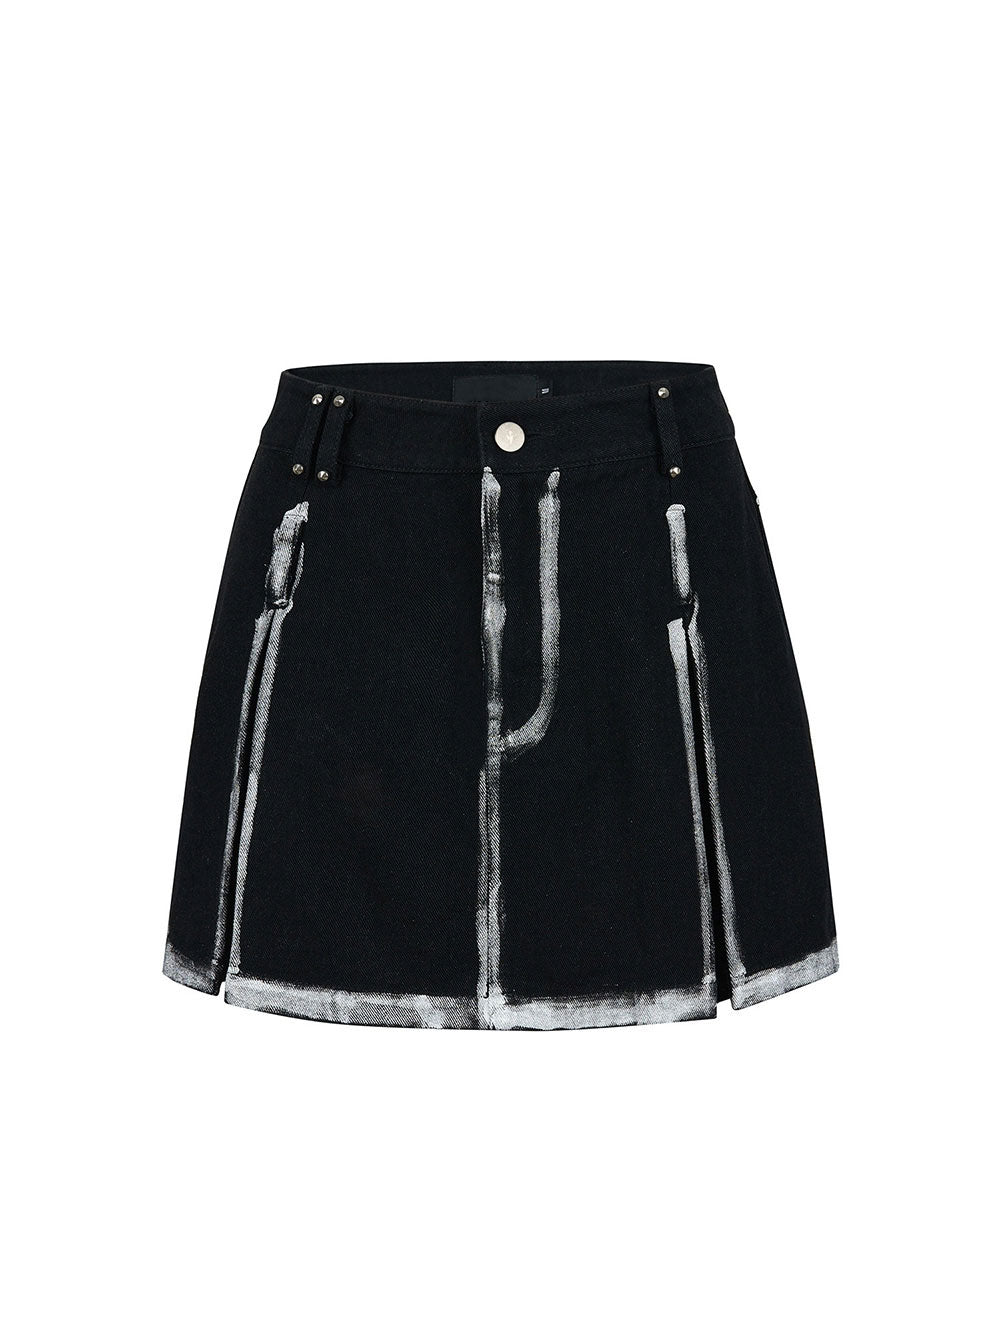 MUKTANK×WESAME Silver Pressed Mini A-Line Denim Skirt